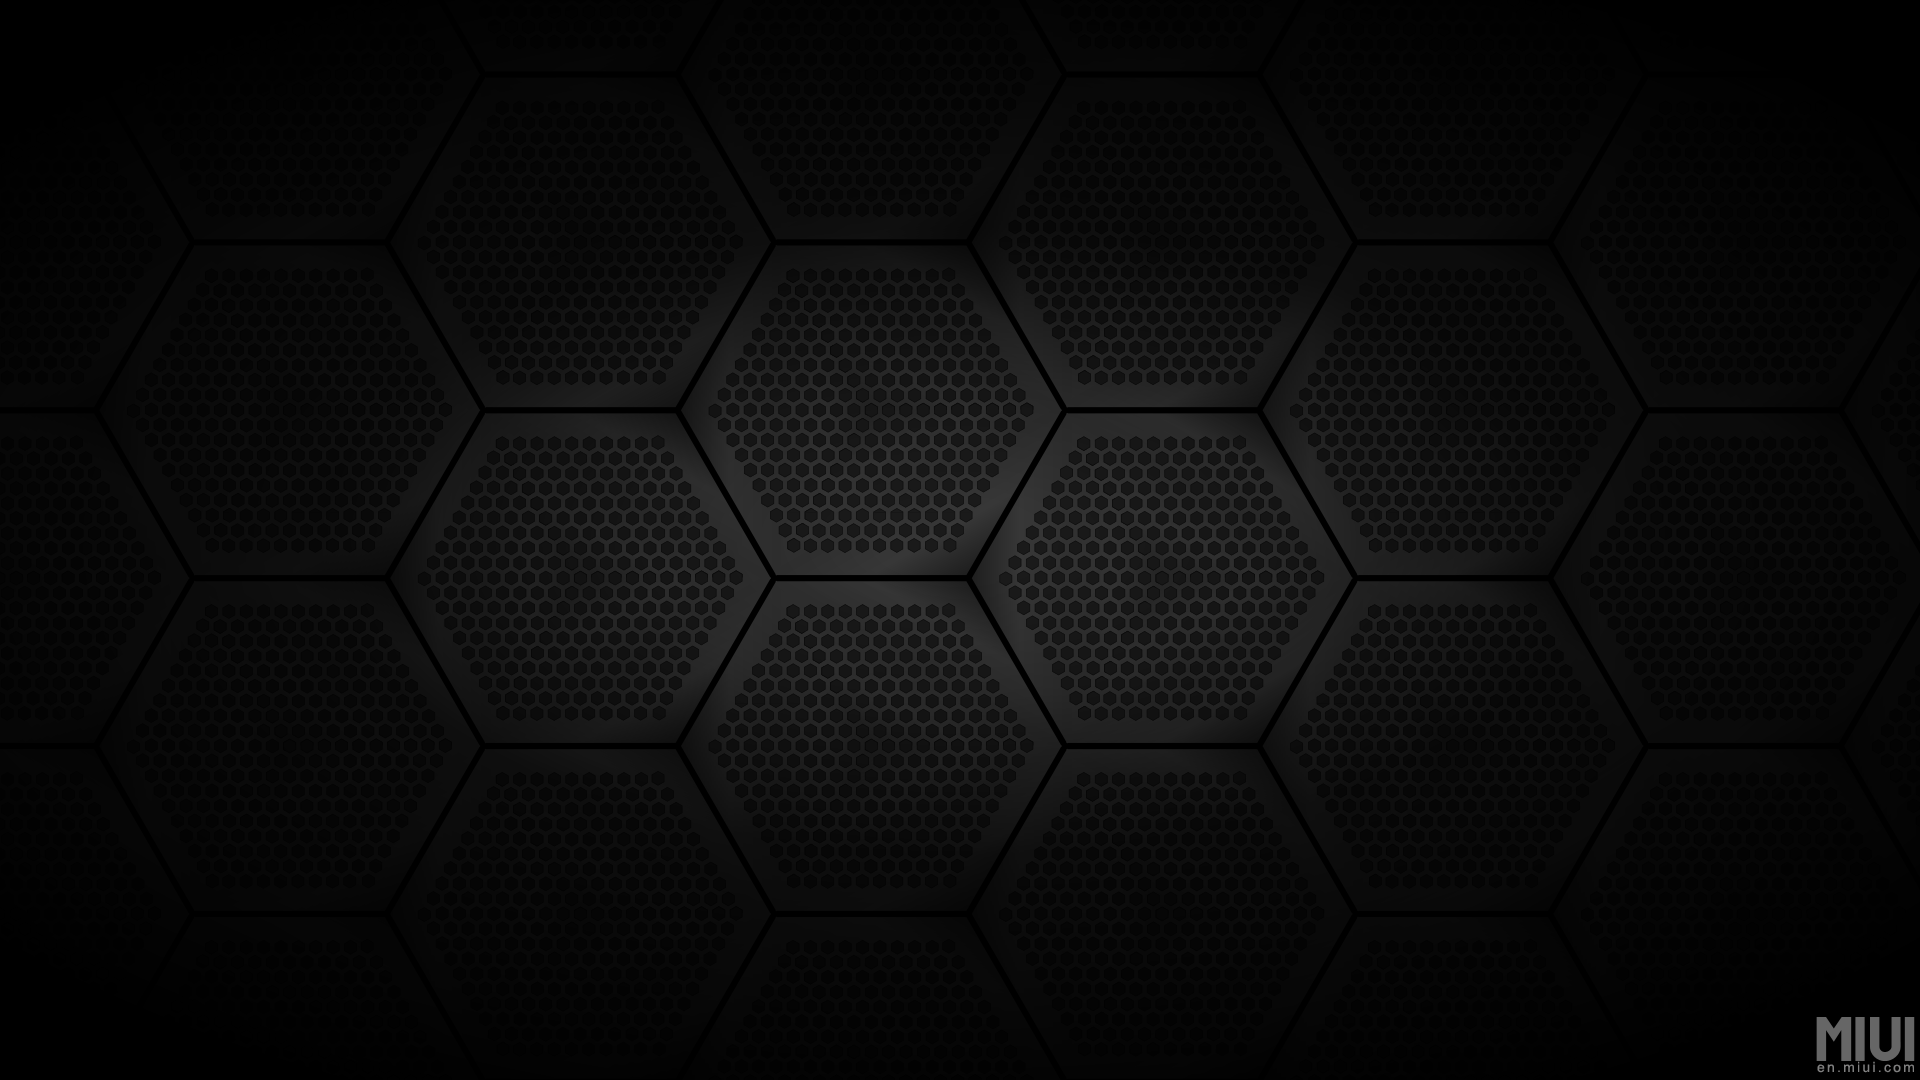 MIUI Resources TeamAbstract Black Wallpaper